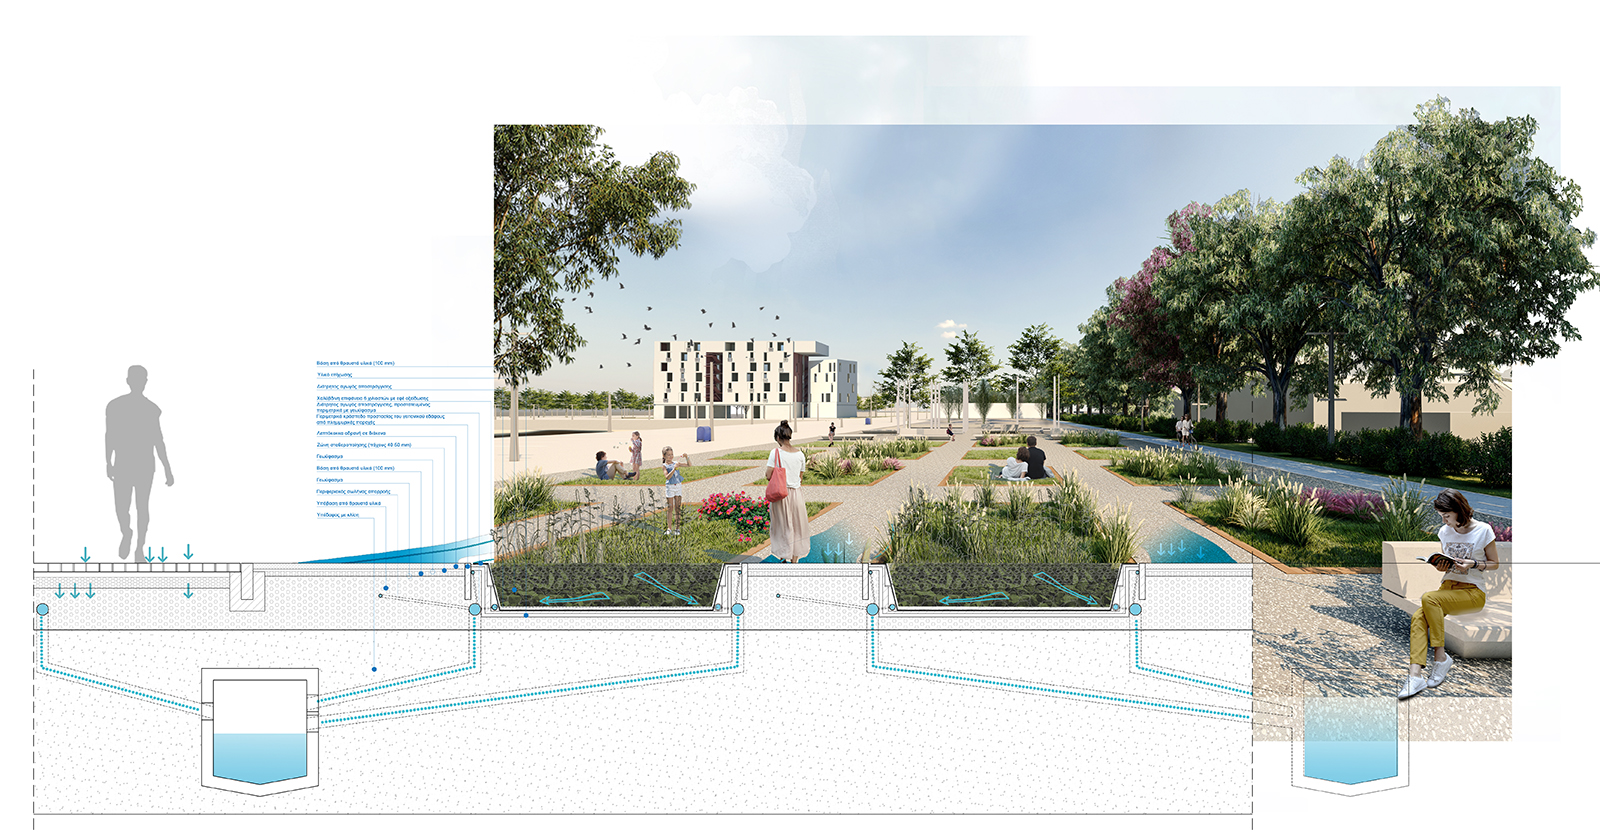 Archisearch Παρουσίαση των προτάσεων που απέσπασαν κατ’ισοβαθμίαν το Β’ Βραβείο στον Πανελλήνιο Ανοιχτό Αρχιτεκτονικό Διαγωνισμό για την “Ανάπλαση του Παραλιακού Μετώπου της Πάτρας”